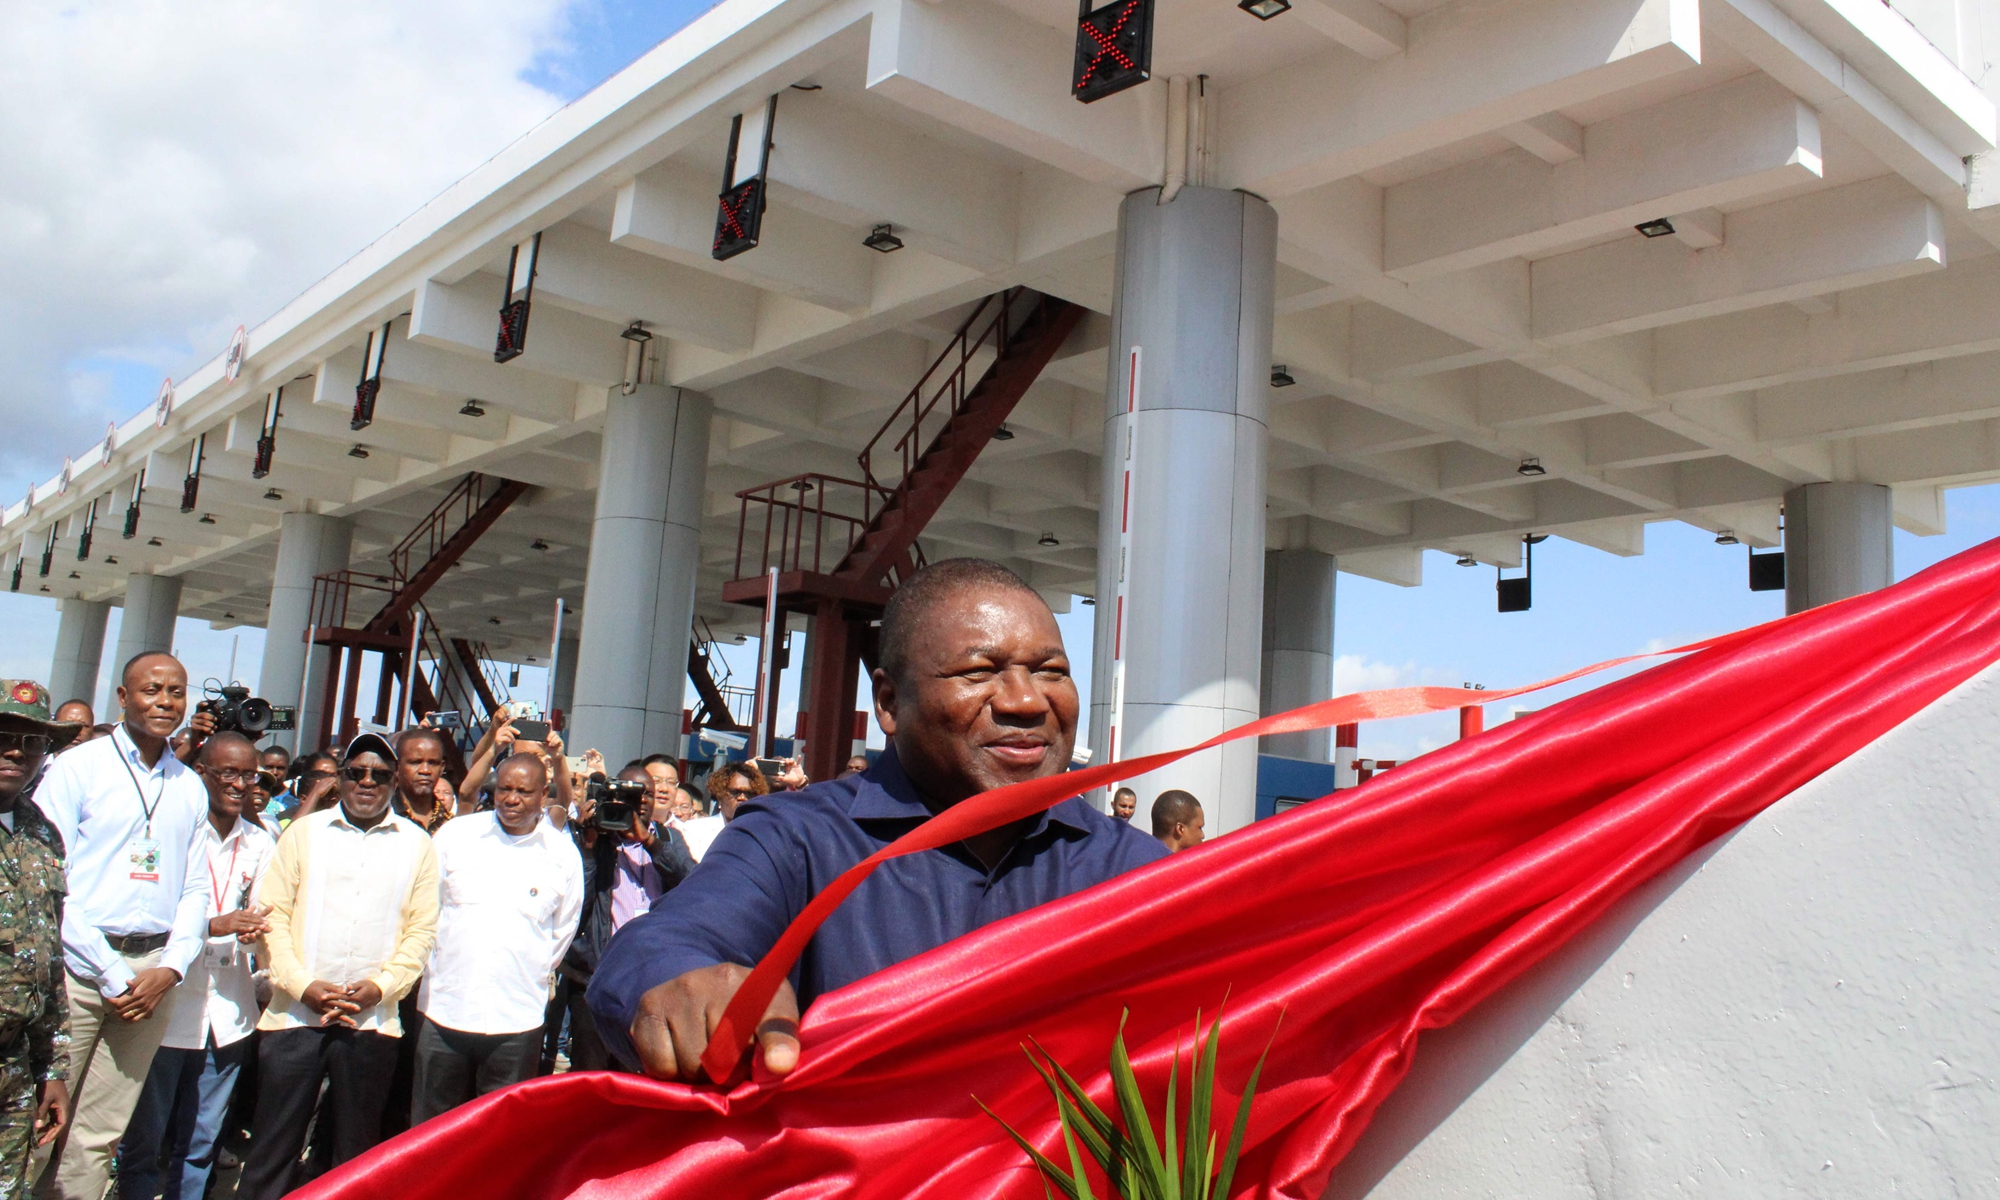 Mozambican President Filipe Nyusi attends the opening ceremony of the bridge in 2018 in Maputo, Mozambique. Photo: VCG